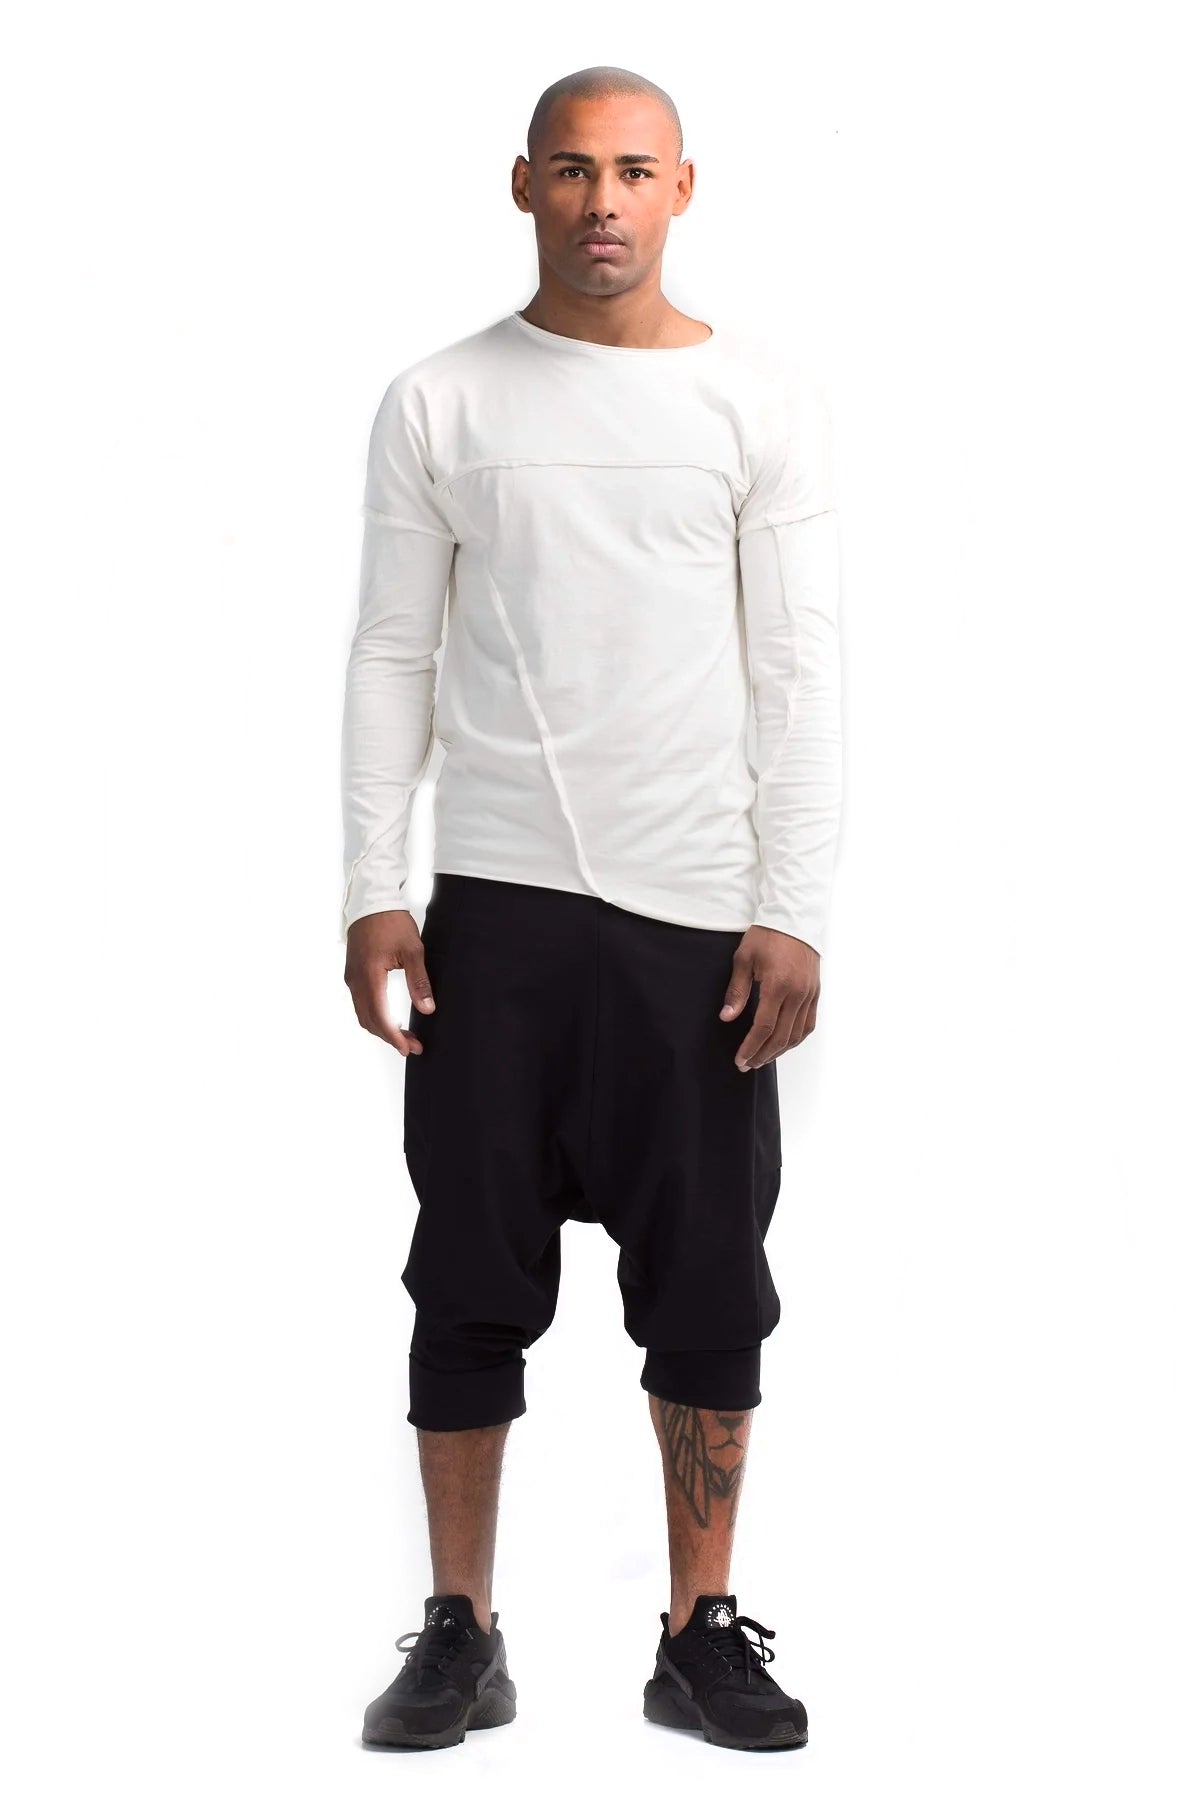 Bundle: Black & White Long Sleeve T-shirt